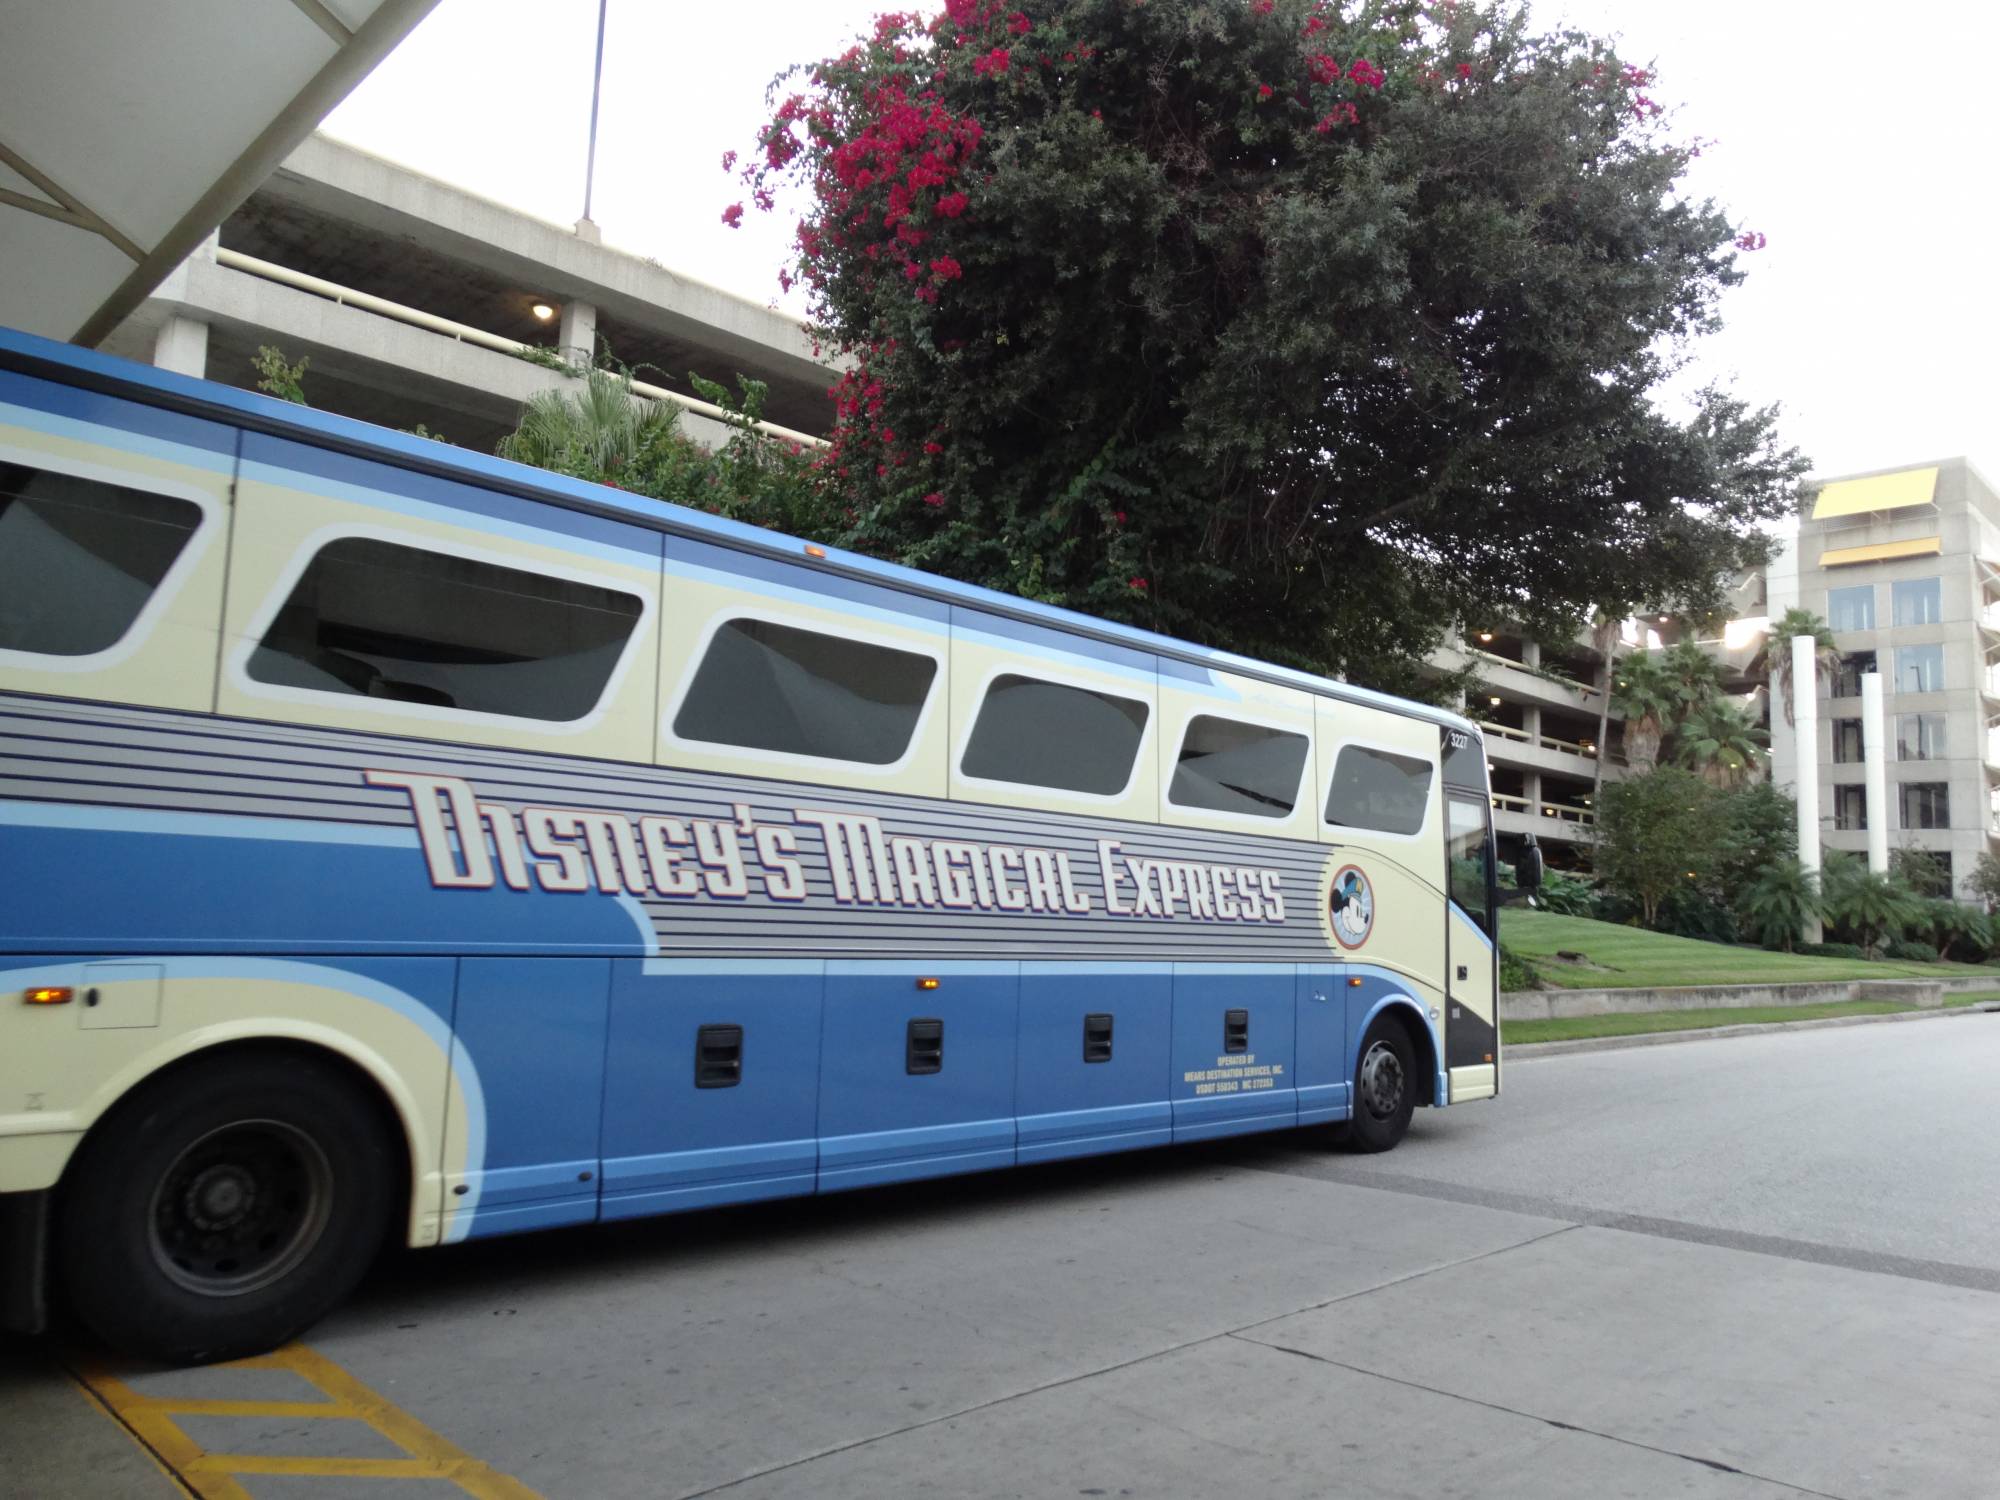 Disney's Magical Express bus at Orlando International Airport